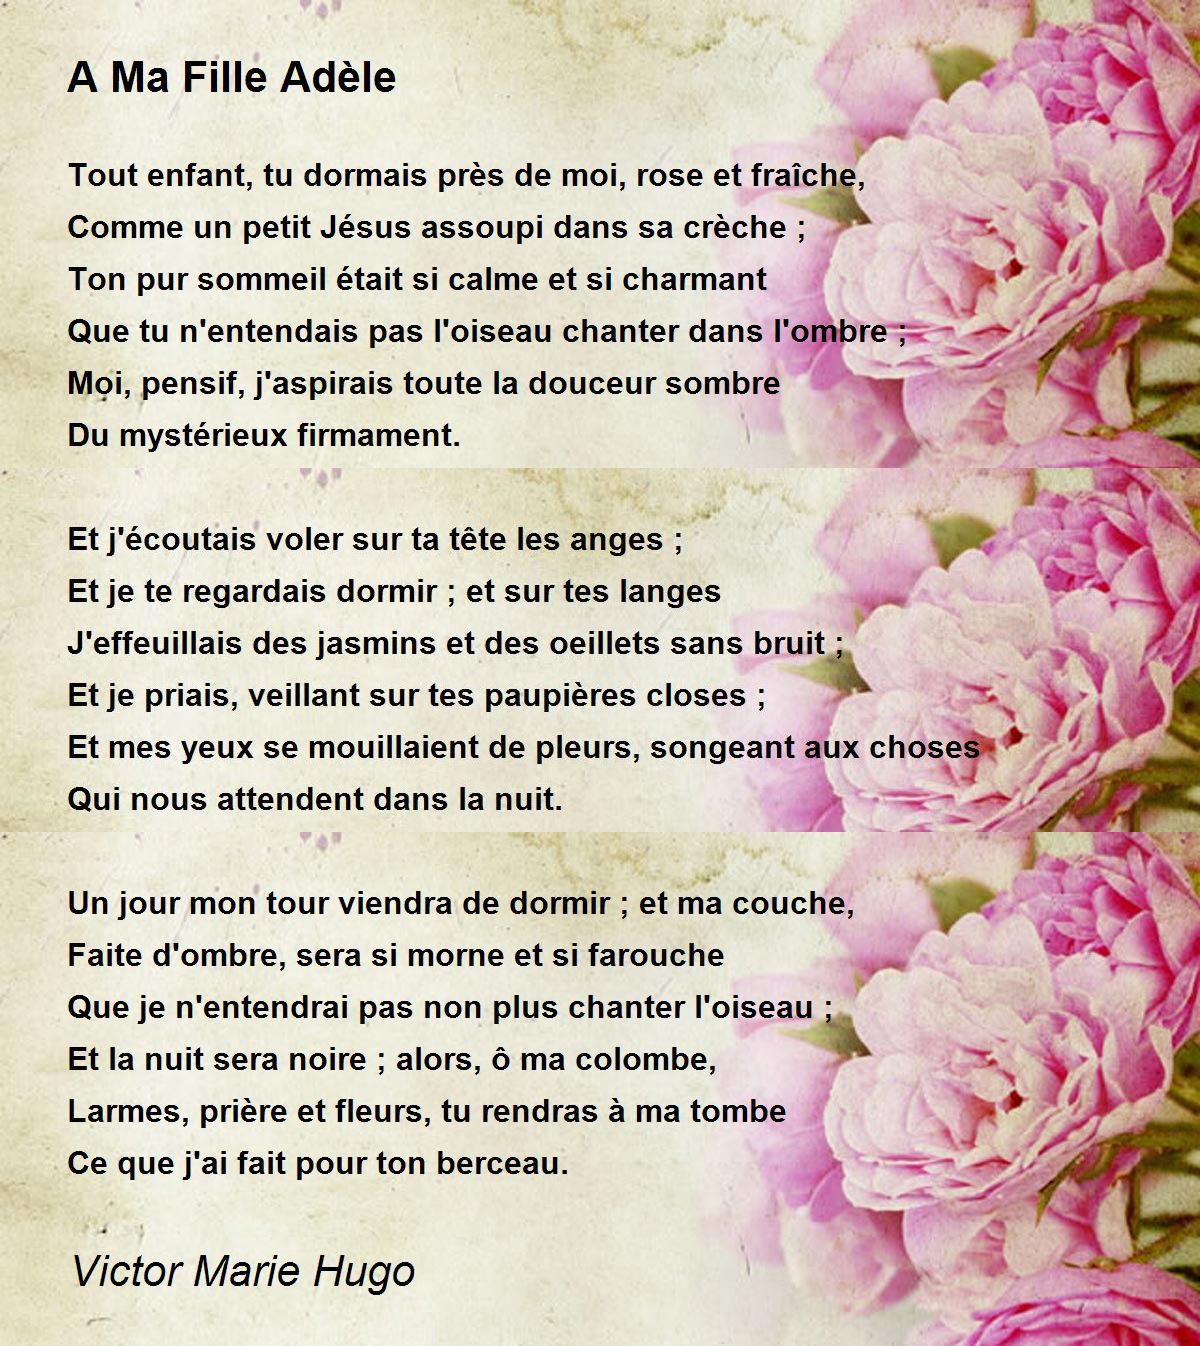 A Ma Fille Adèle - A Ma Fille Adèle Poem by Victor Marie Hugo